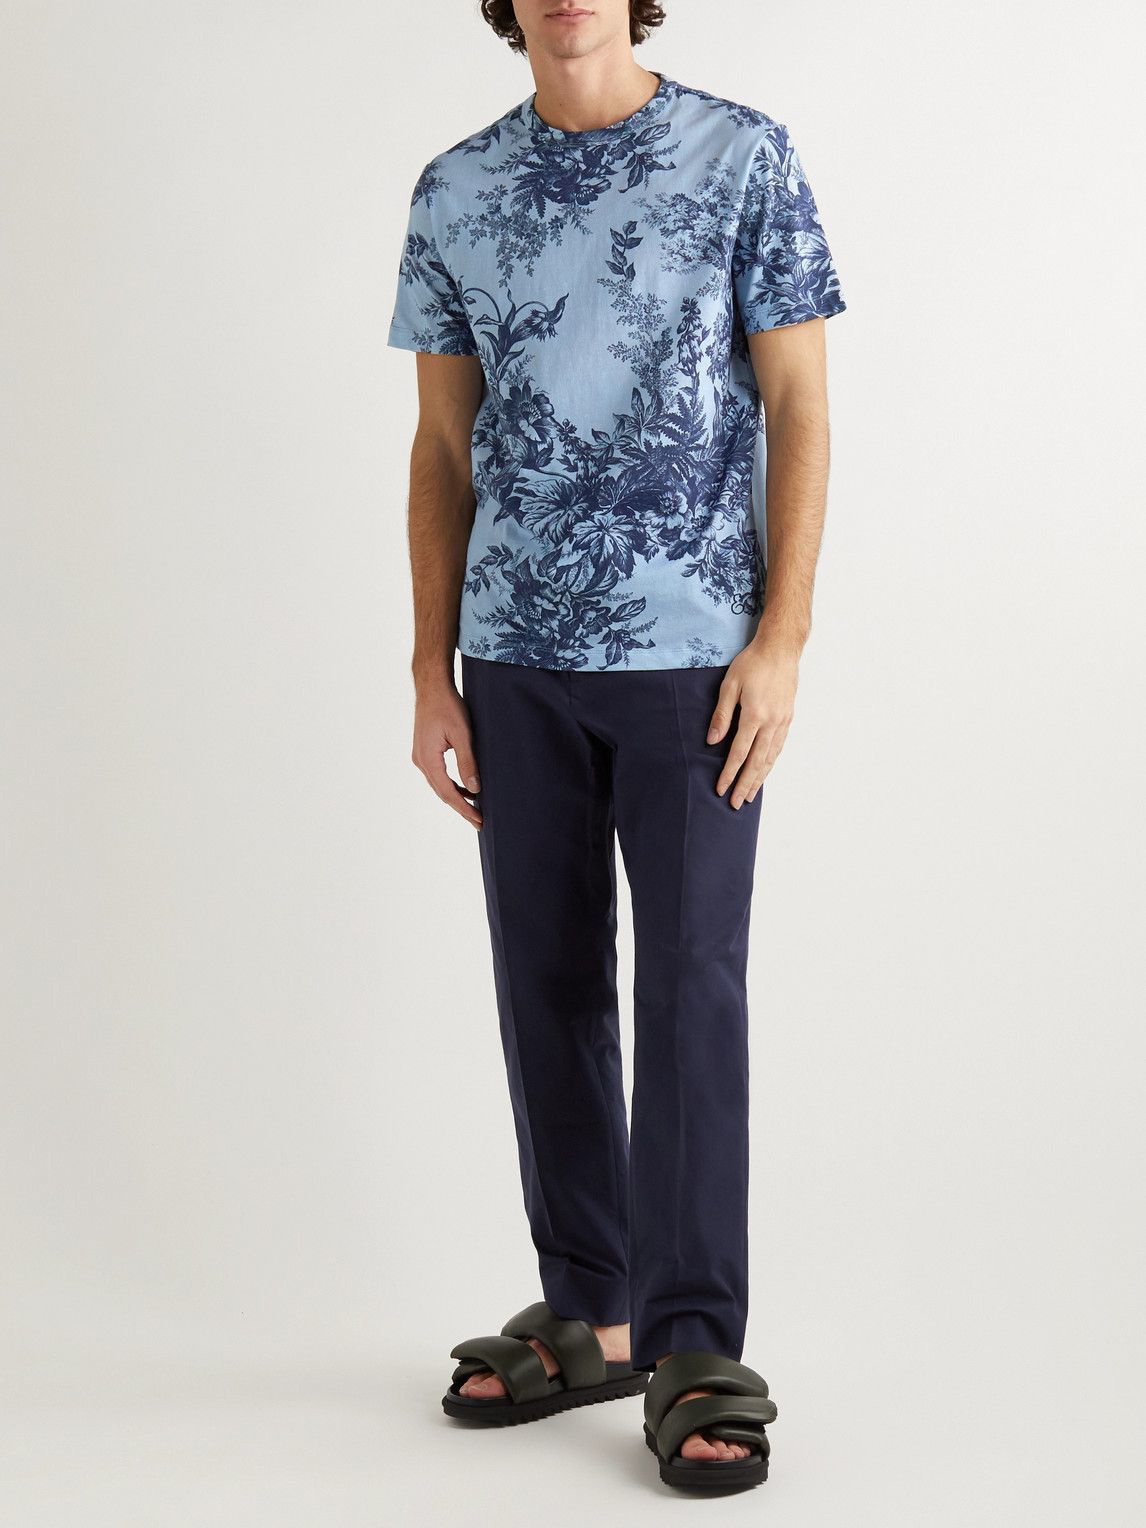 T-Shirt Navy Blue Toile de Jouy Cotton and Linen Jersey